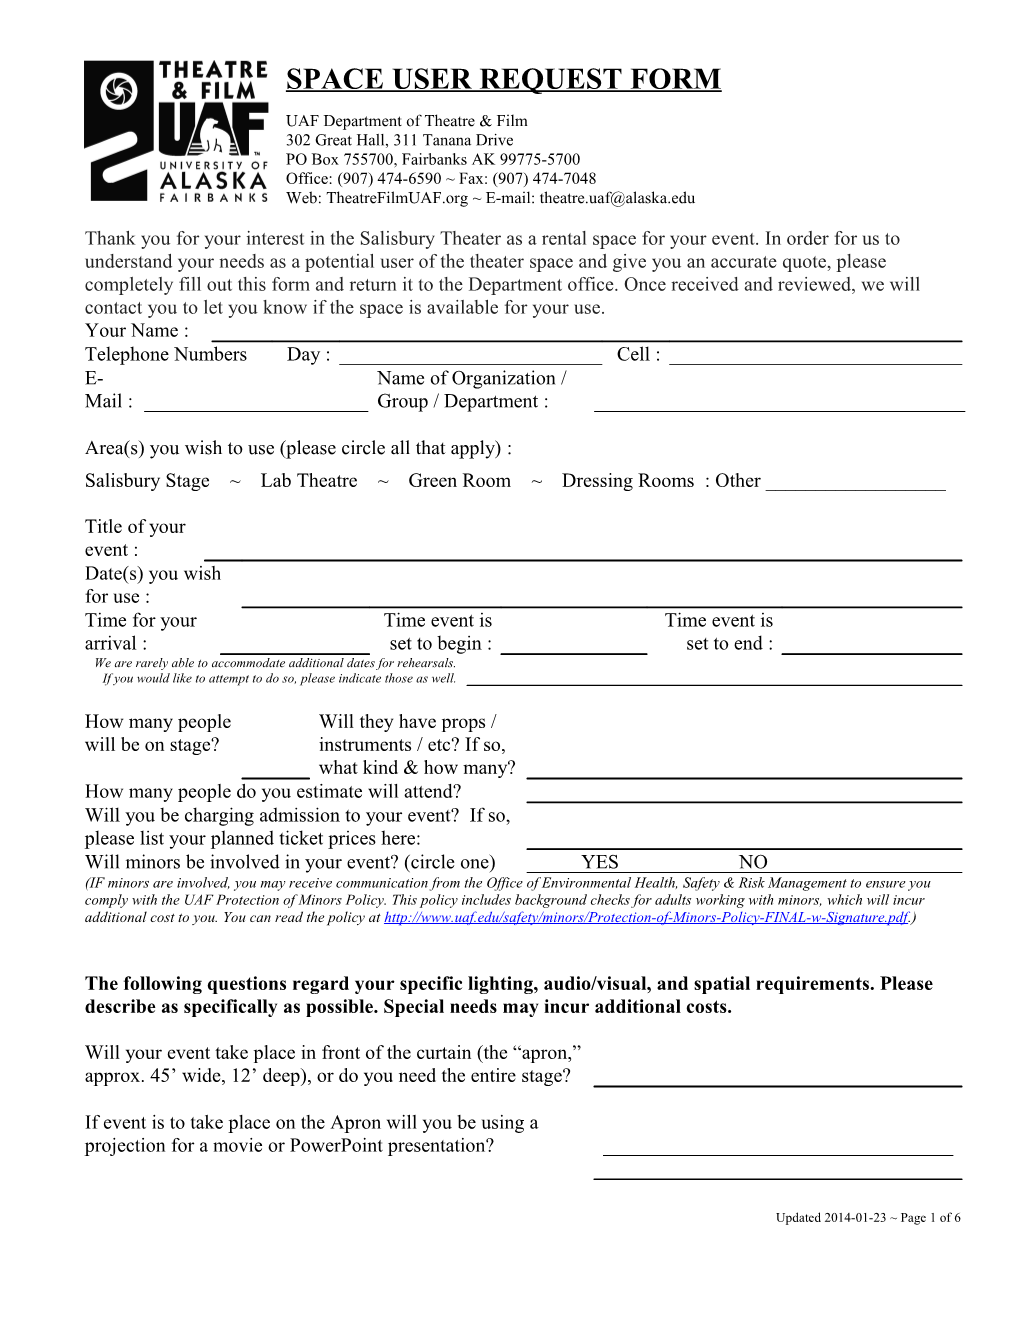 Theatre UAF Space User Information Form